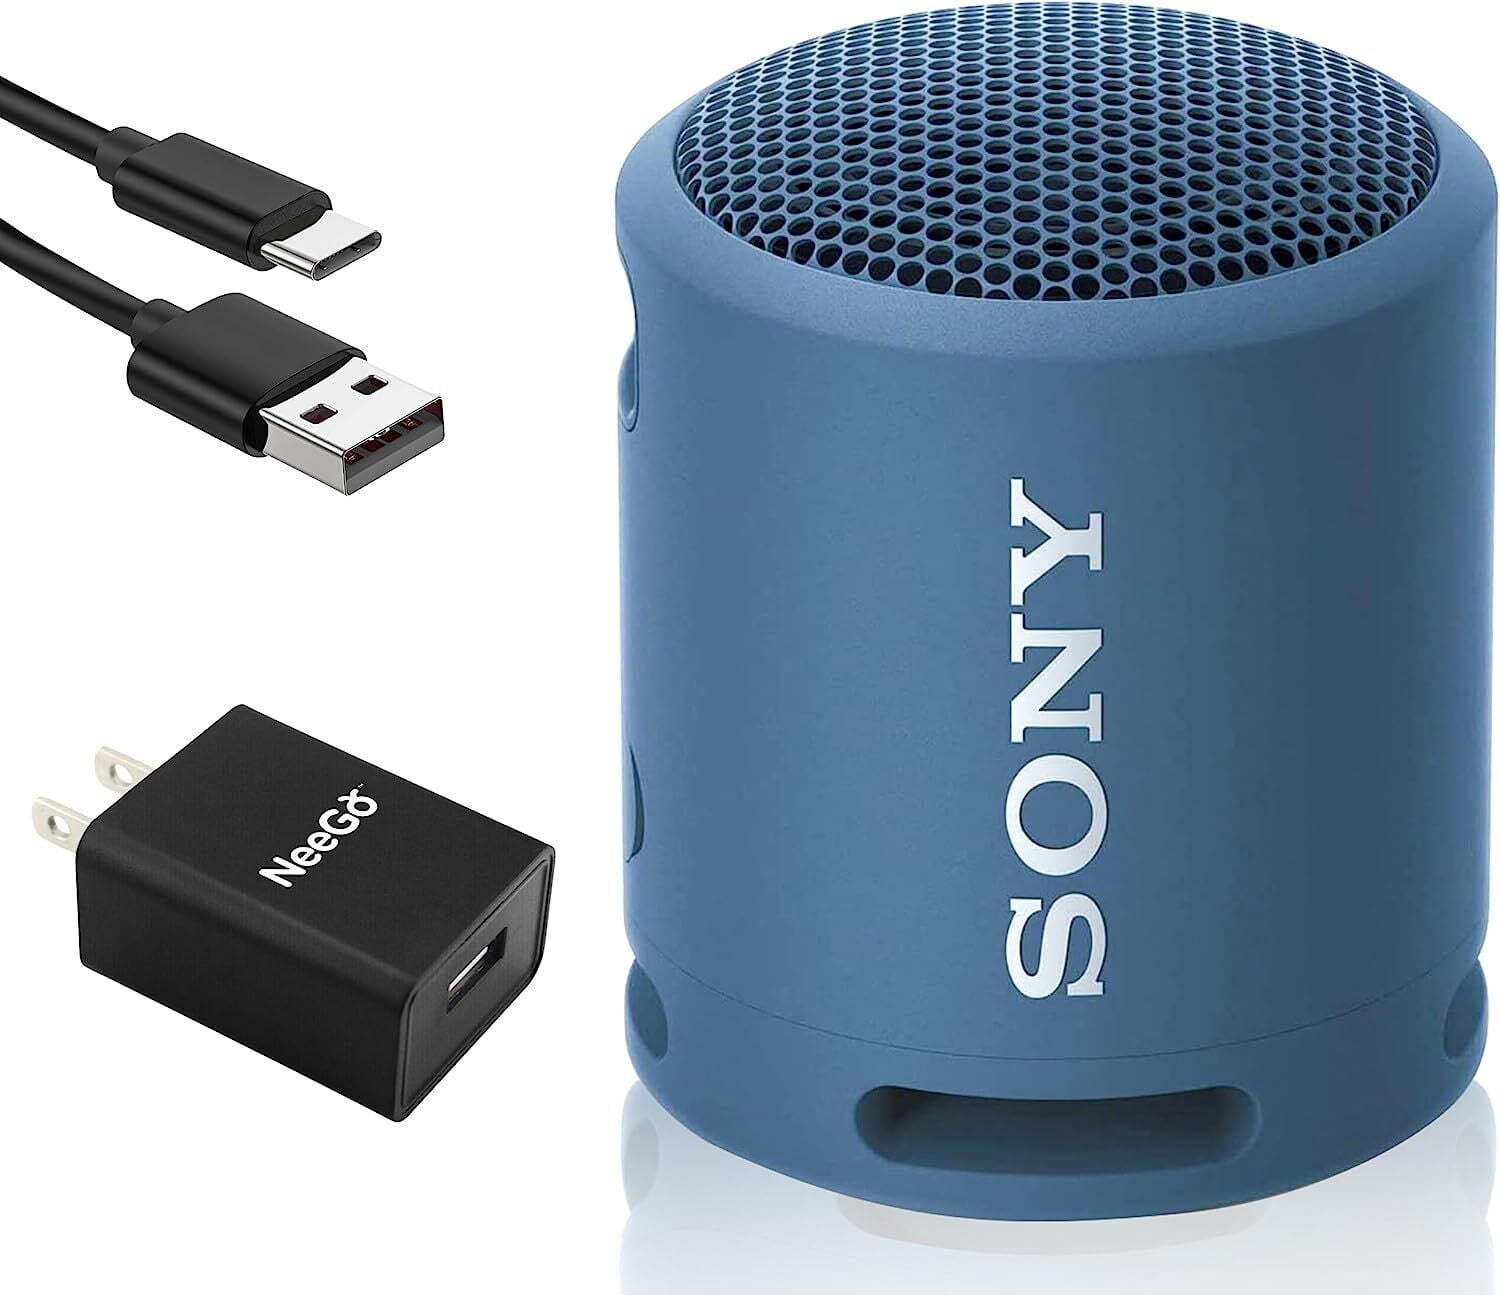 Sony SRS-XB13 Bluetooth speaker review: Small wonder